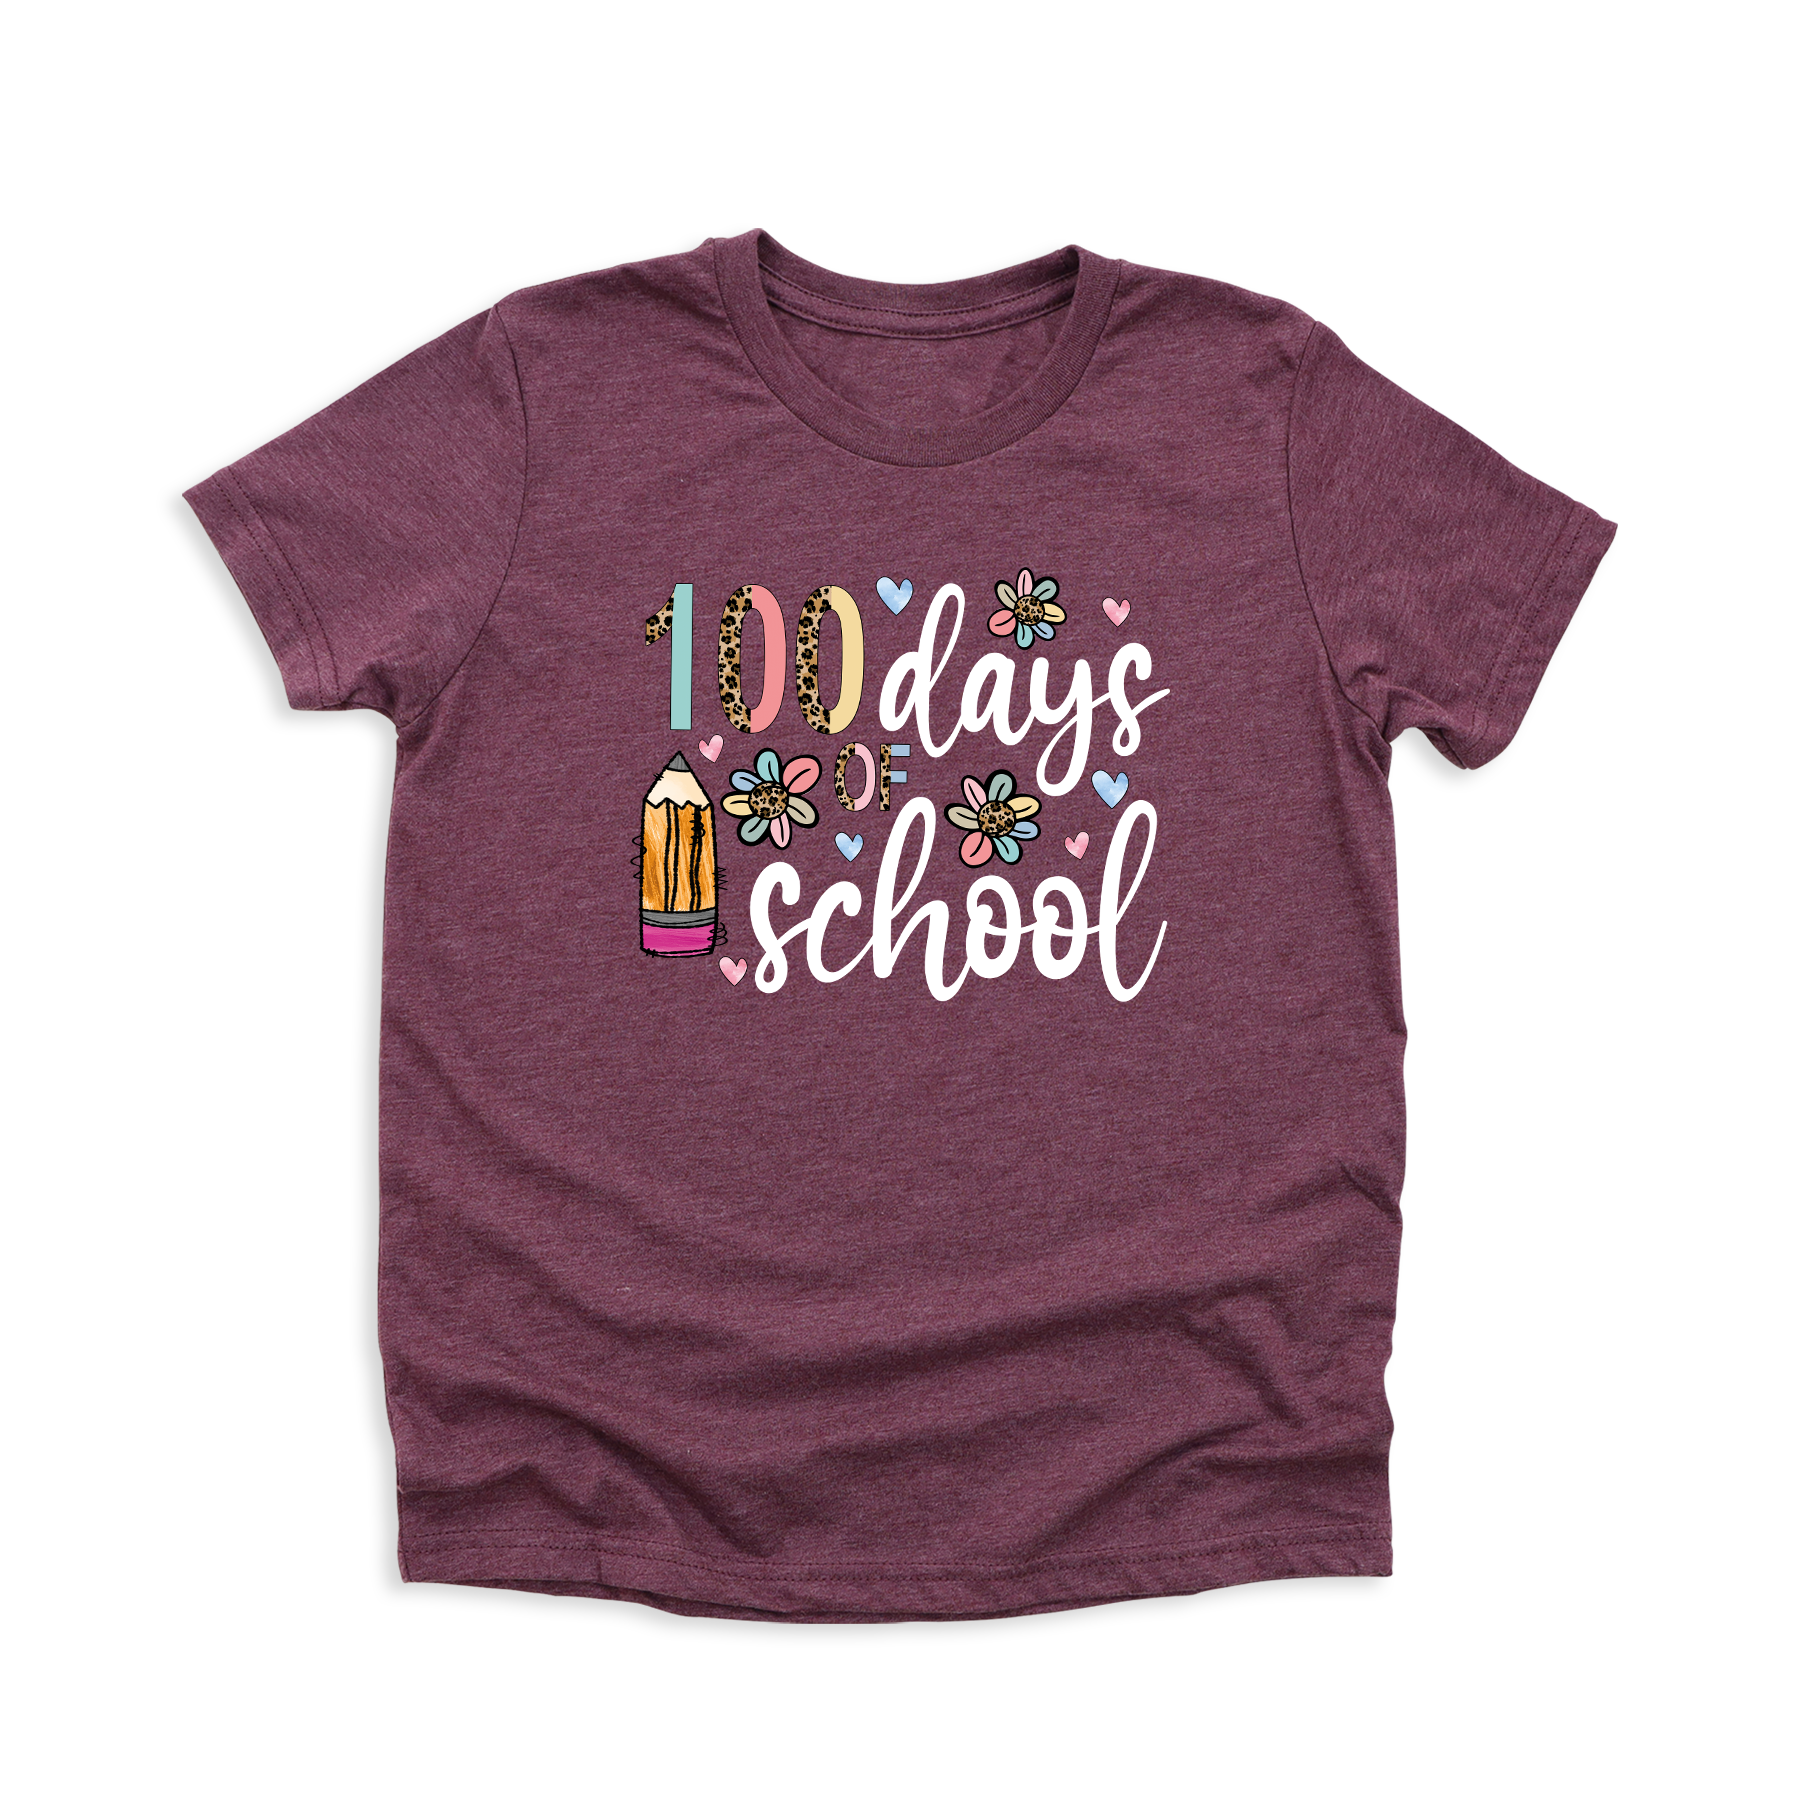 100 Days of School Shirts